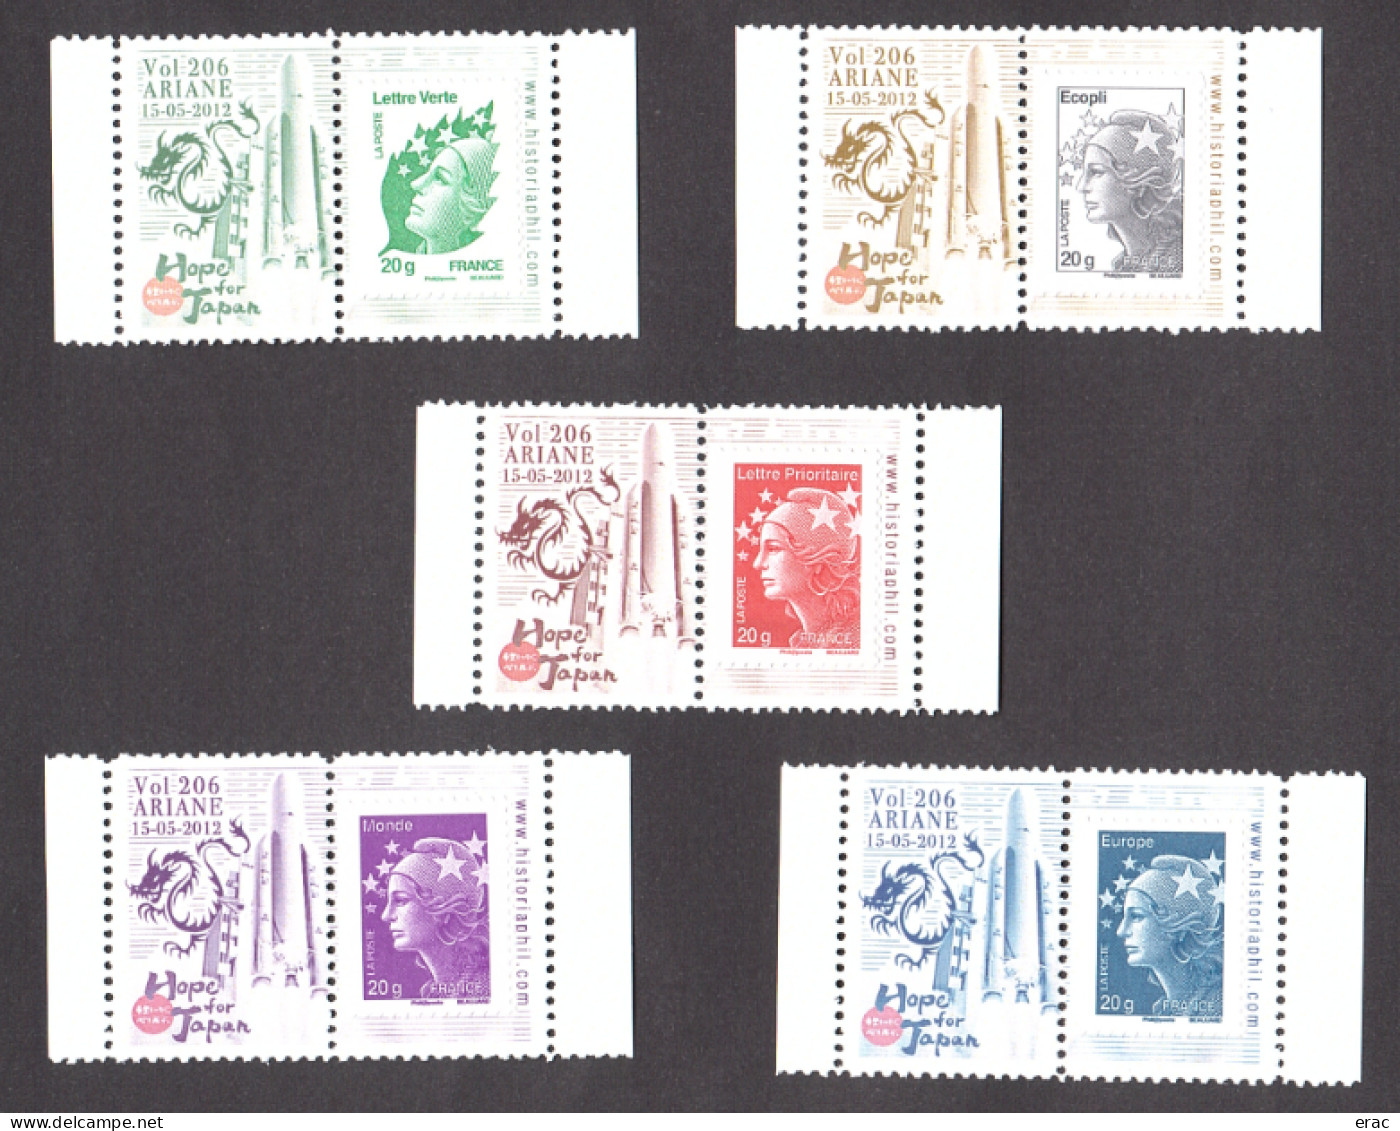 5 Porte-timbres Gommés Avec TVP Marianne De Beaujard Neufs - 2012 Ariane Vol 206 - Hope For Japan - Dragon - 2008-2013 Marianne Van Beaujard